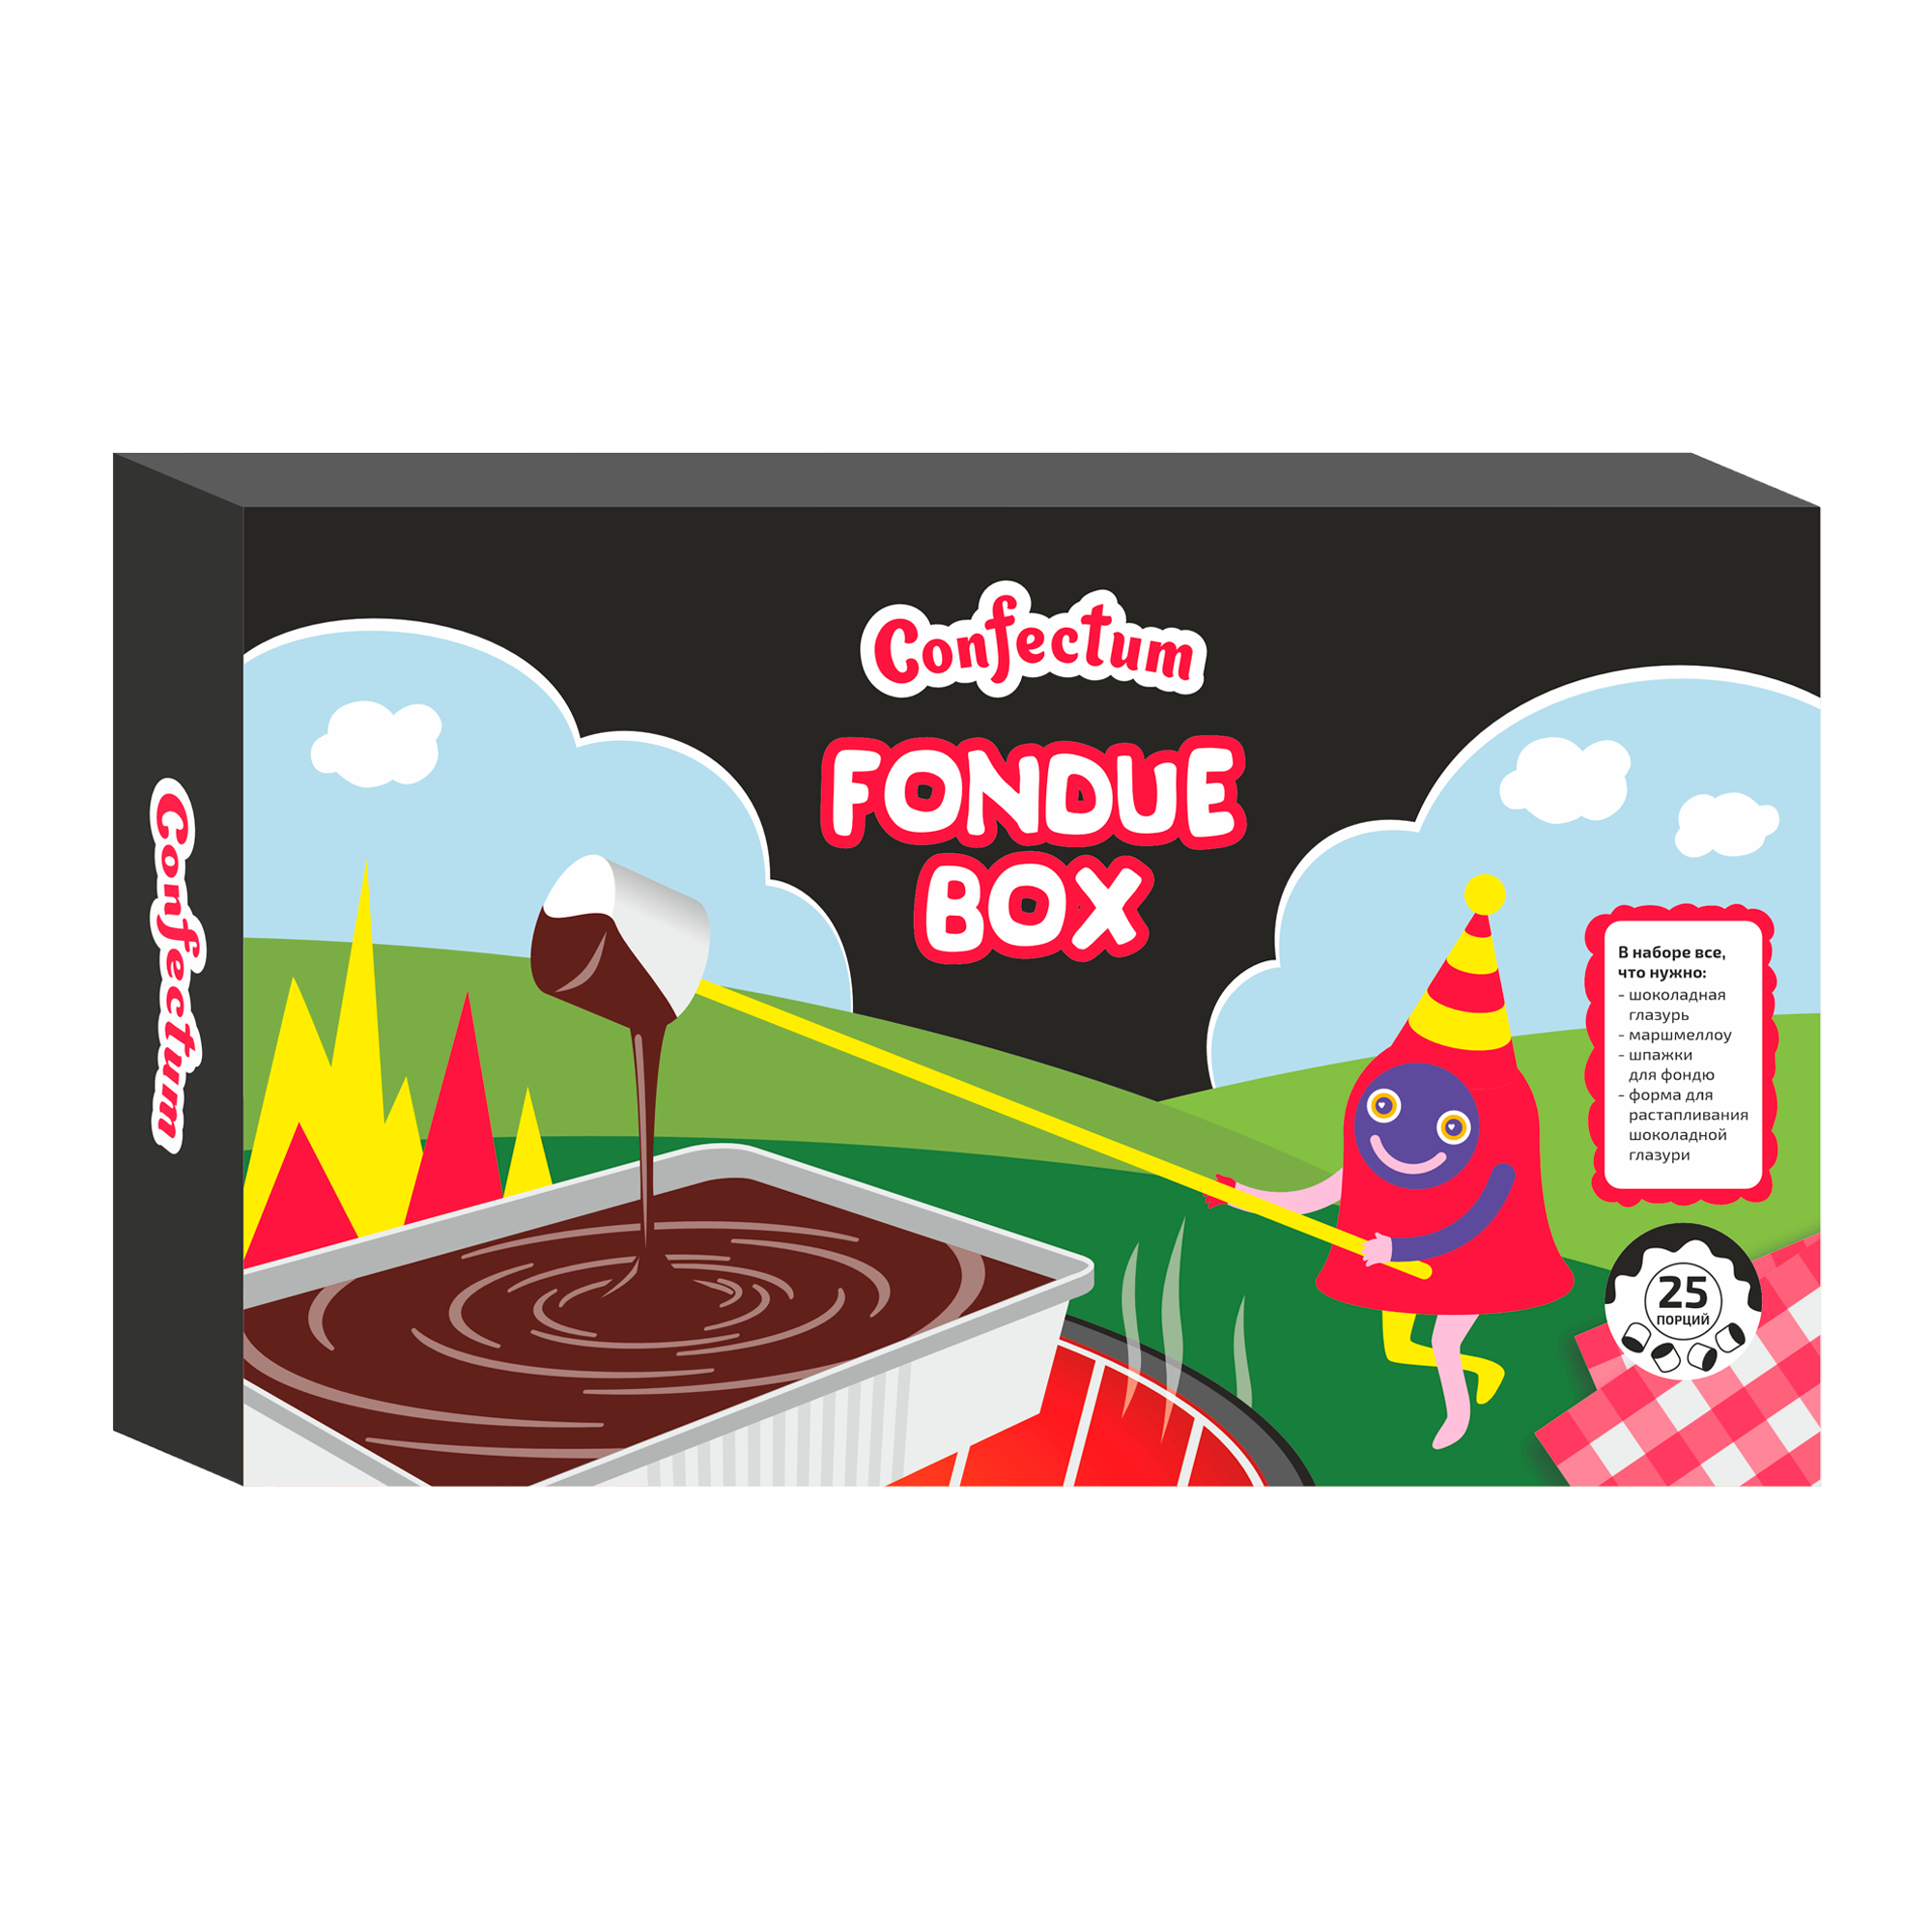 Набор "Confectum Fondue Box" для пикника 200г/Конфектум